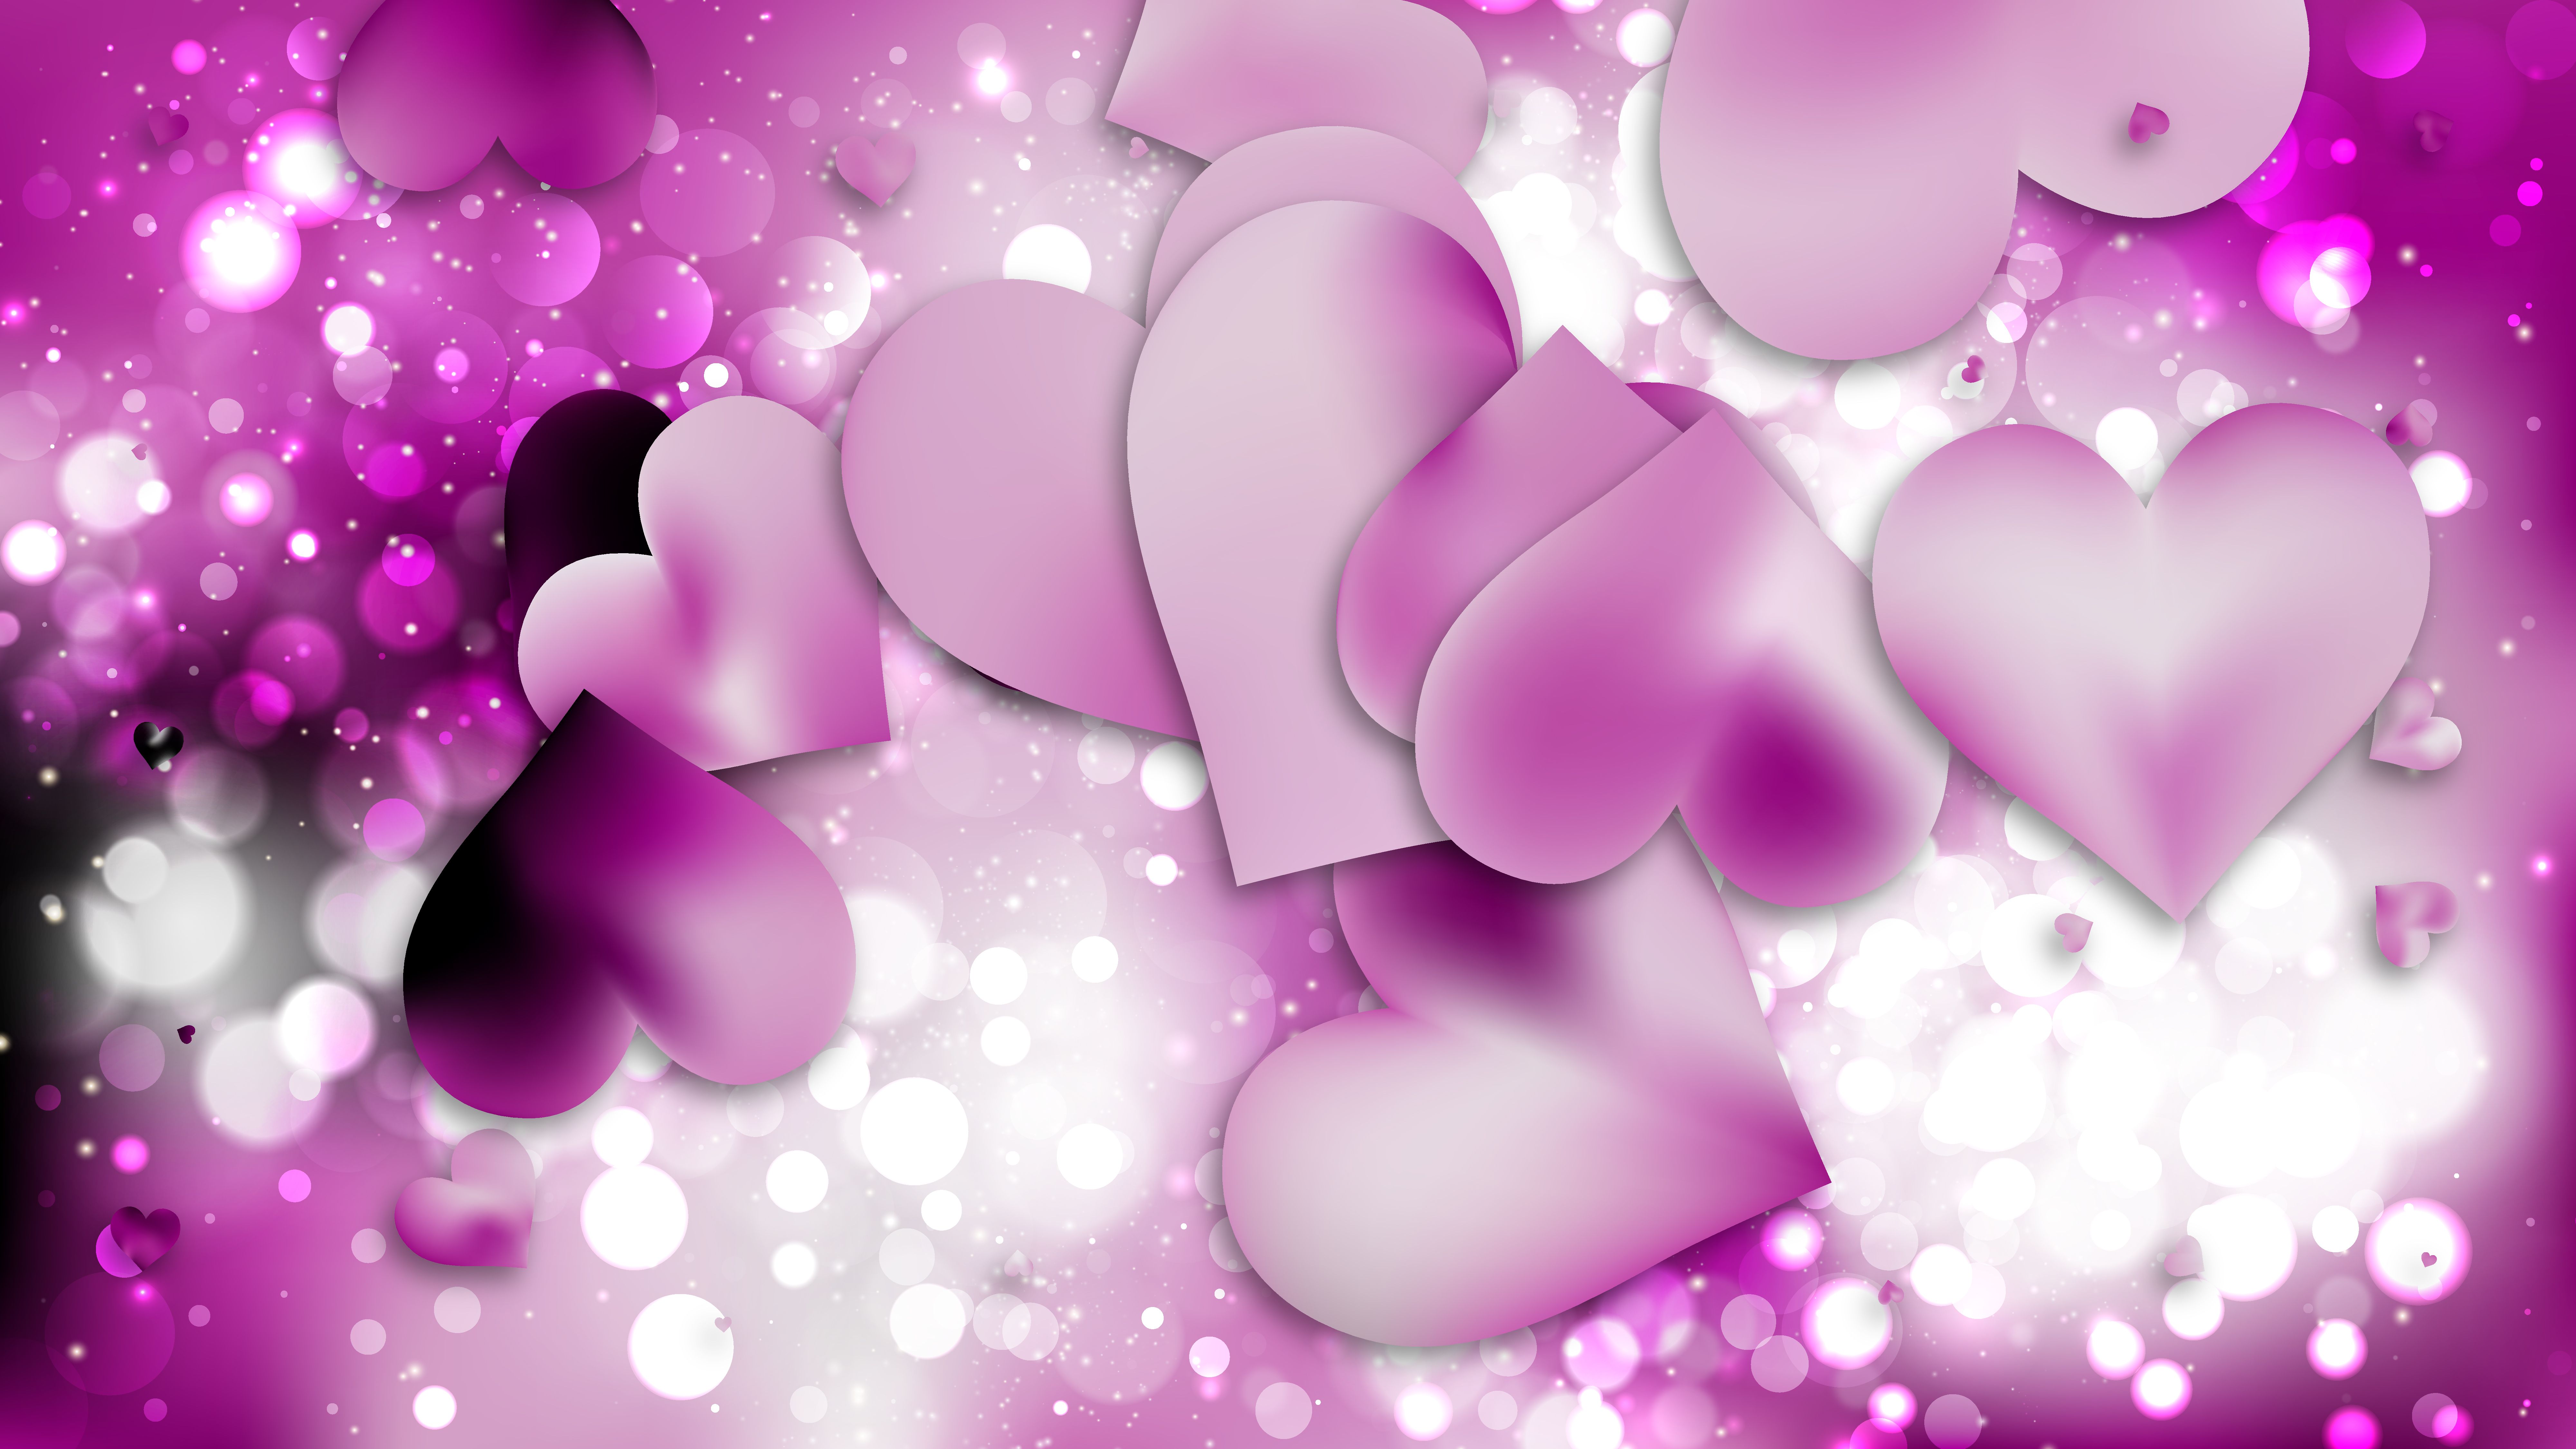 8000x4500 Purple Heart Wallpaper Background Vector Illustration on Wallpape...